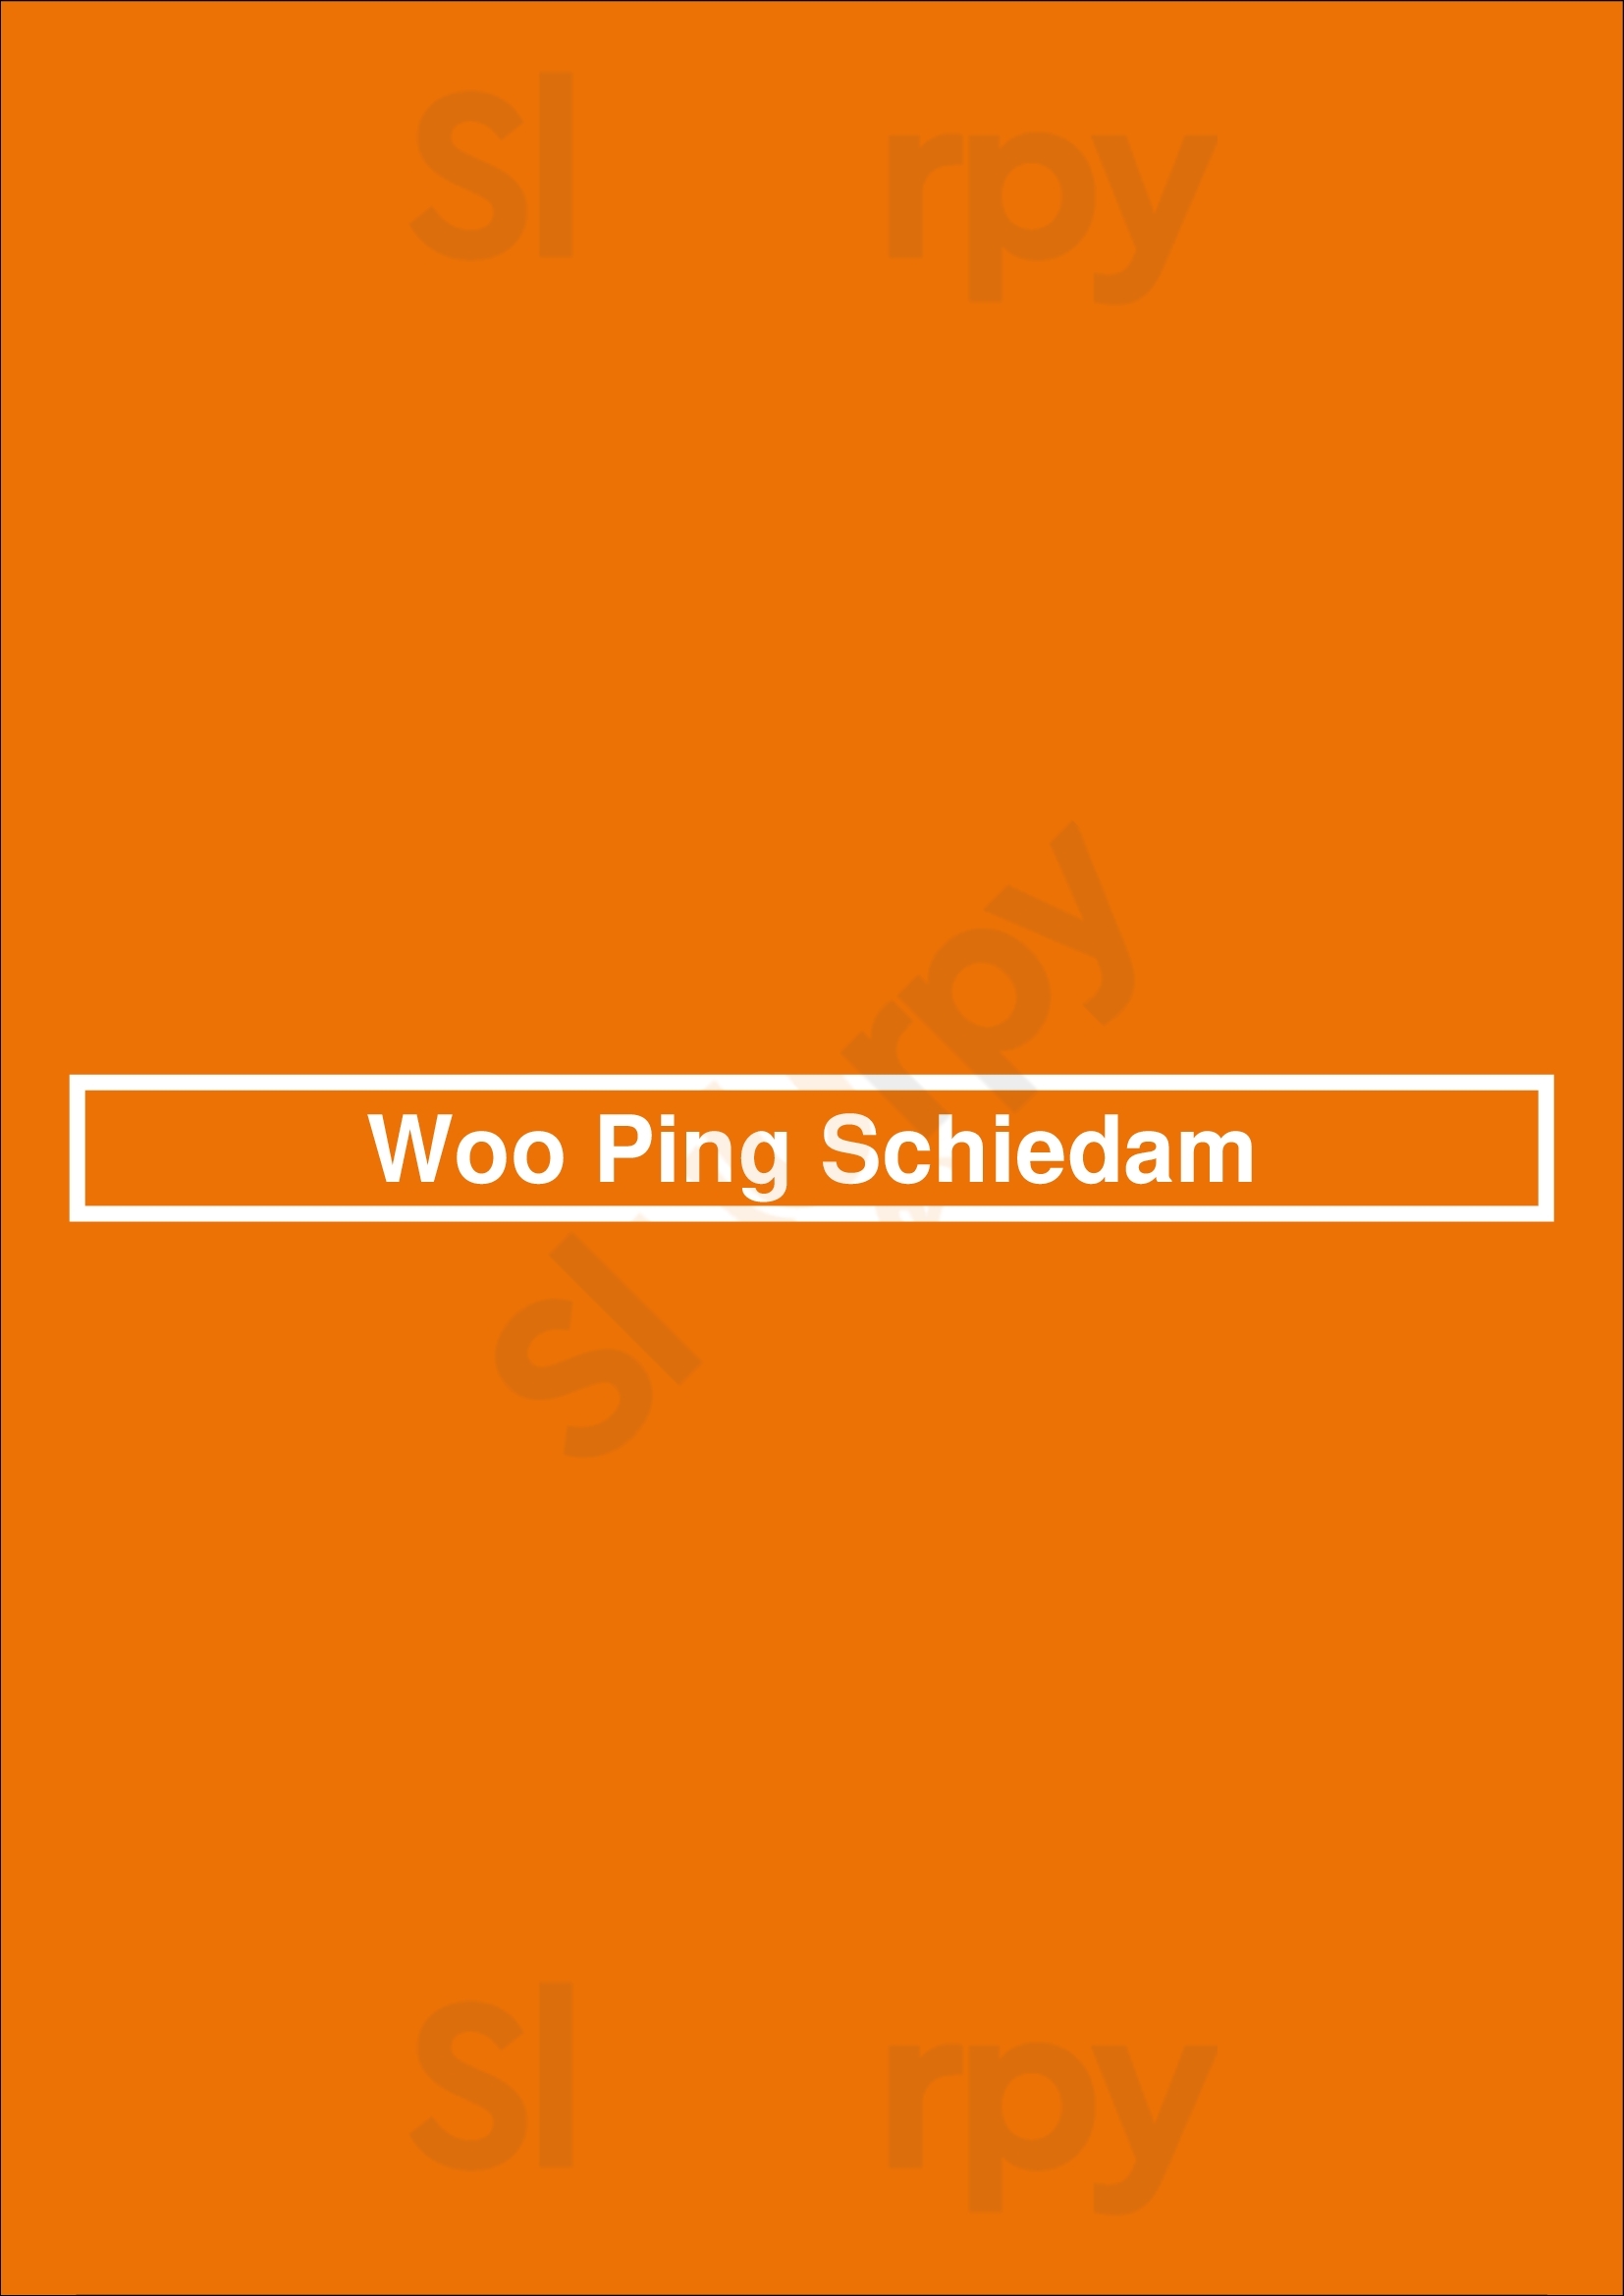 Woo Ping Schiedam Schiedam Menu - 1